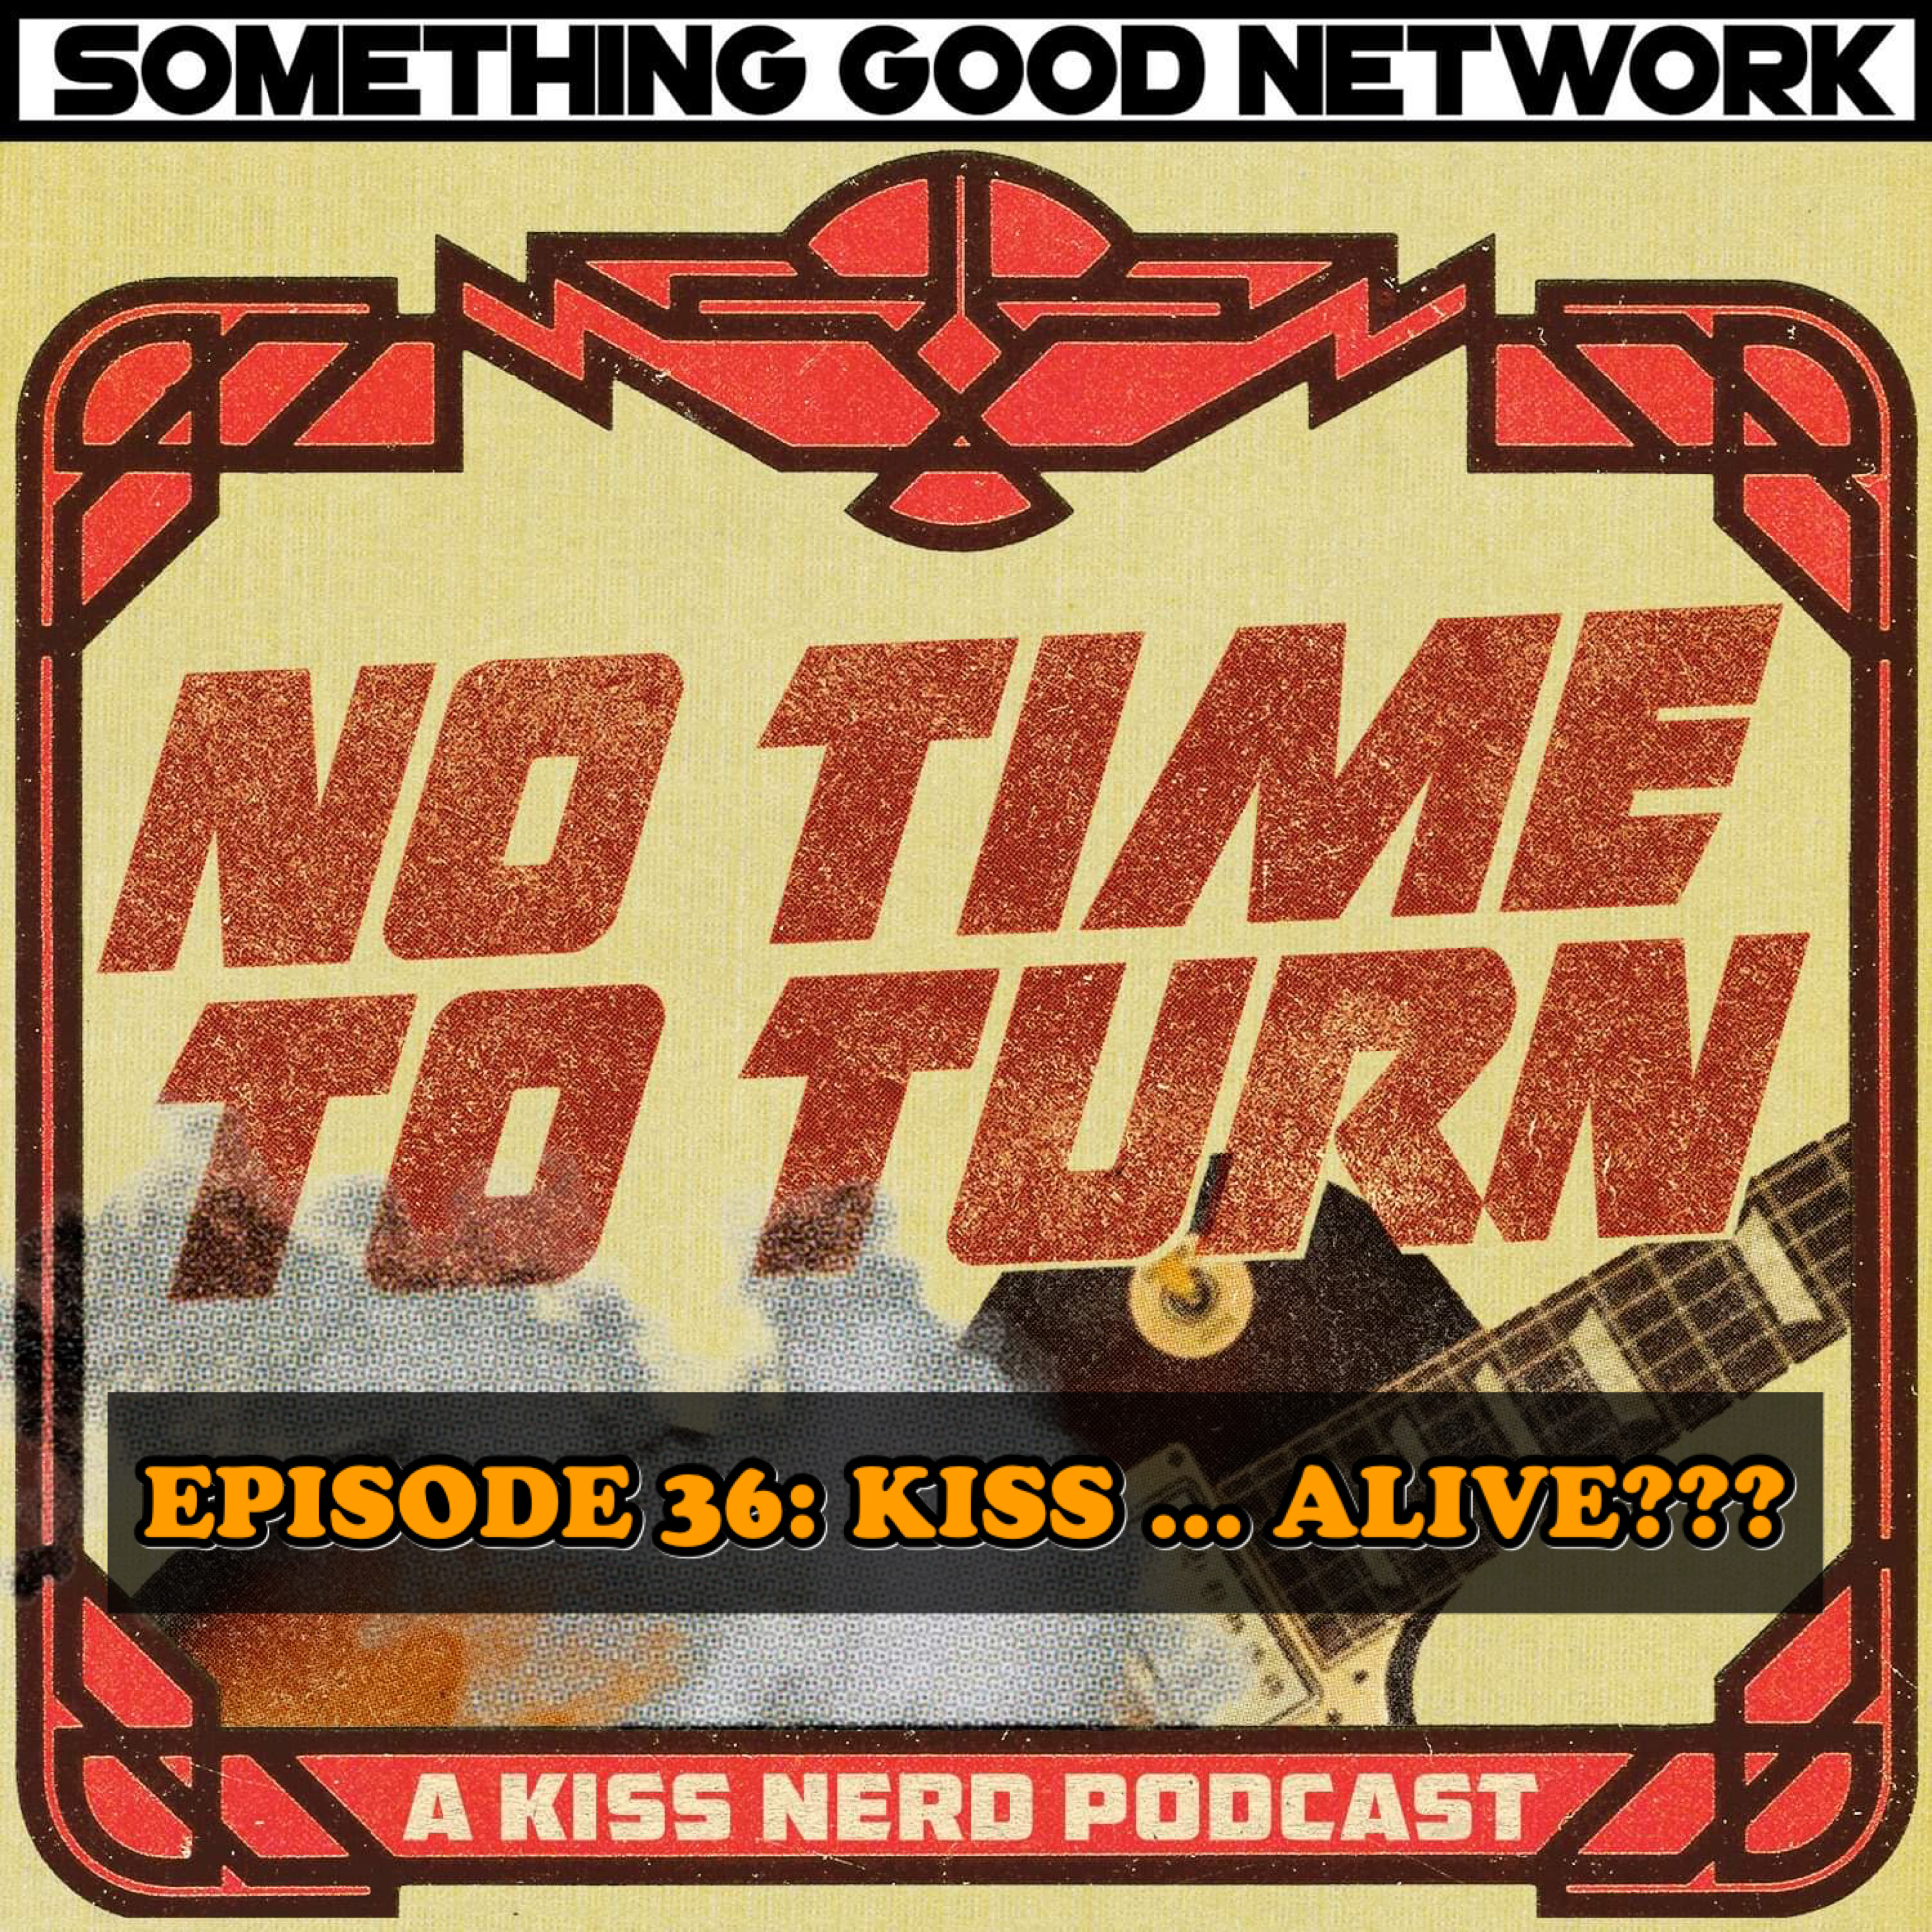 Episode 36 - KISS ... ALIVE??? hero artwork